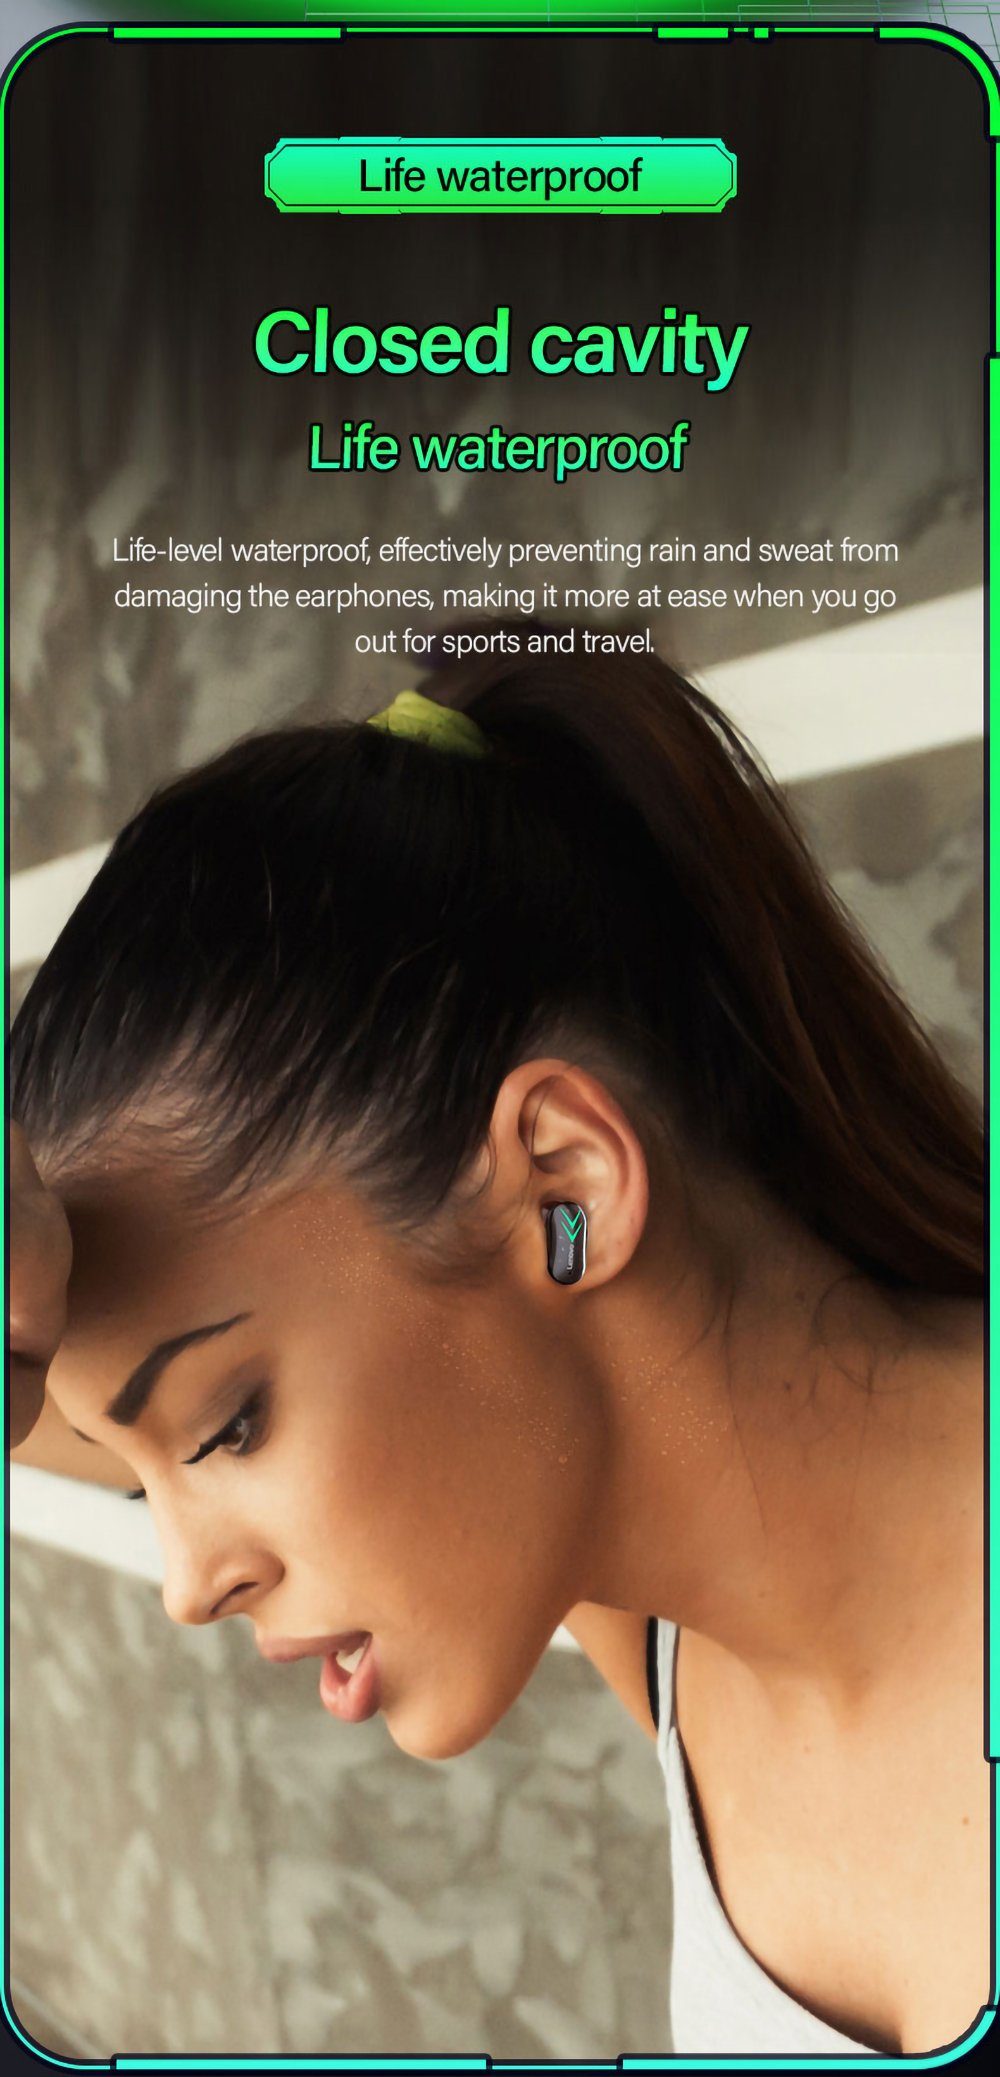 mAh 300 Touch-Steuerung - Google Bluetooth-Kopfhörer mit kabellos, XT82 Bluetooth Wireless, Kopfhörer-Ladehülle Siri, Schwarz) mit (True 5.1, Assistant, Stereo-Ohrhörer Lenovo